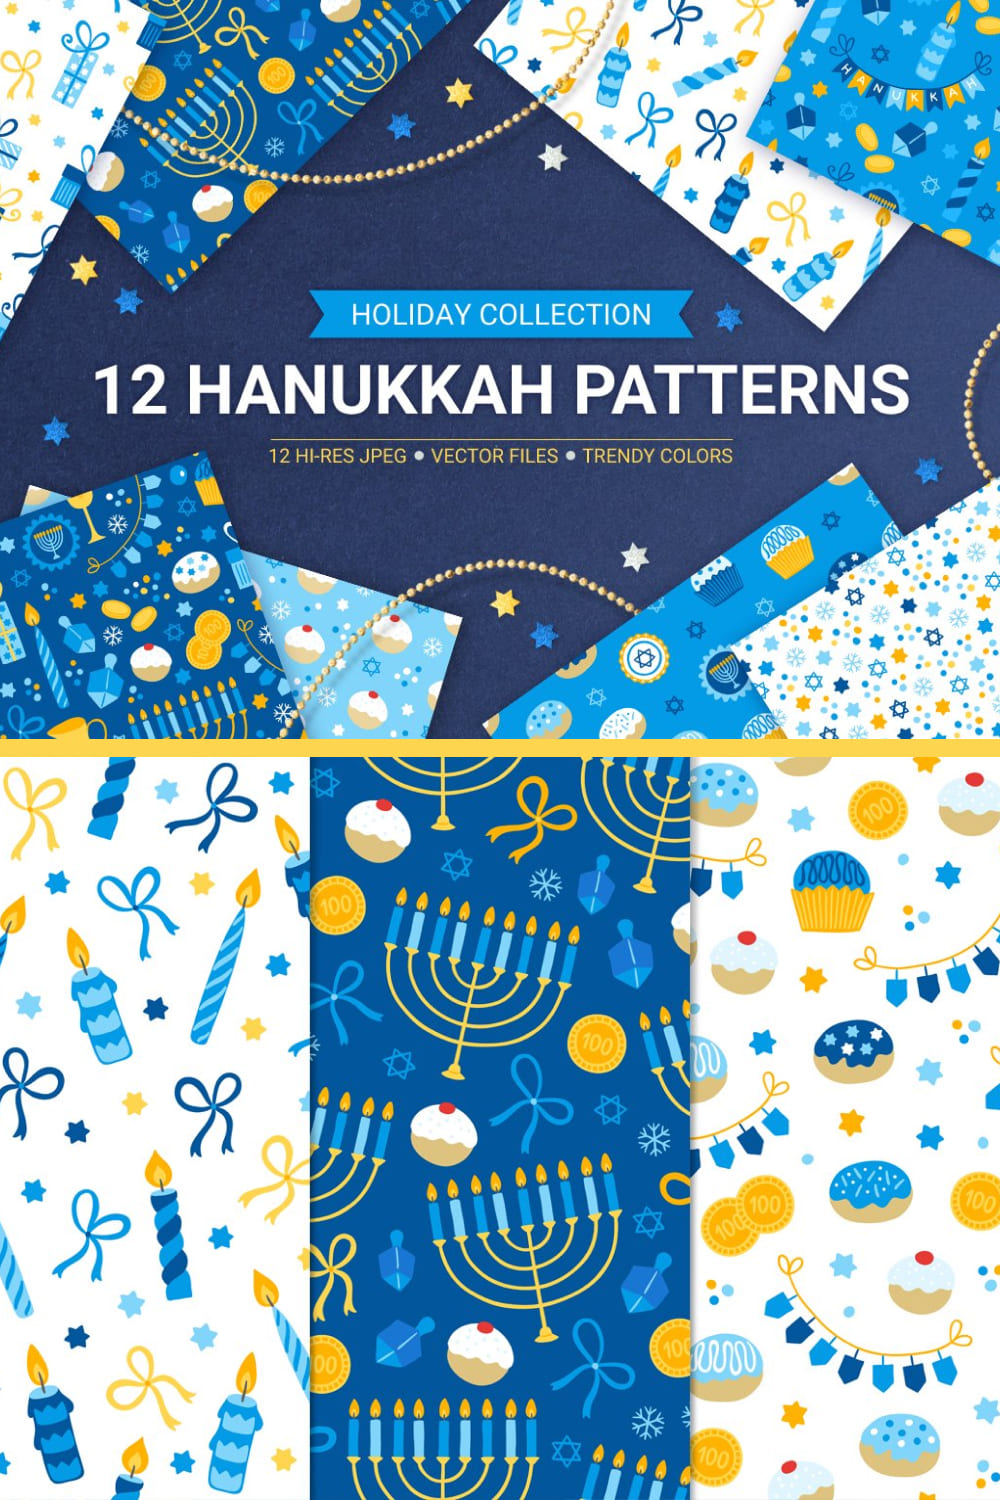 Hanukkah seamless patterns of pinterest.